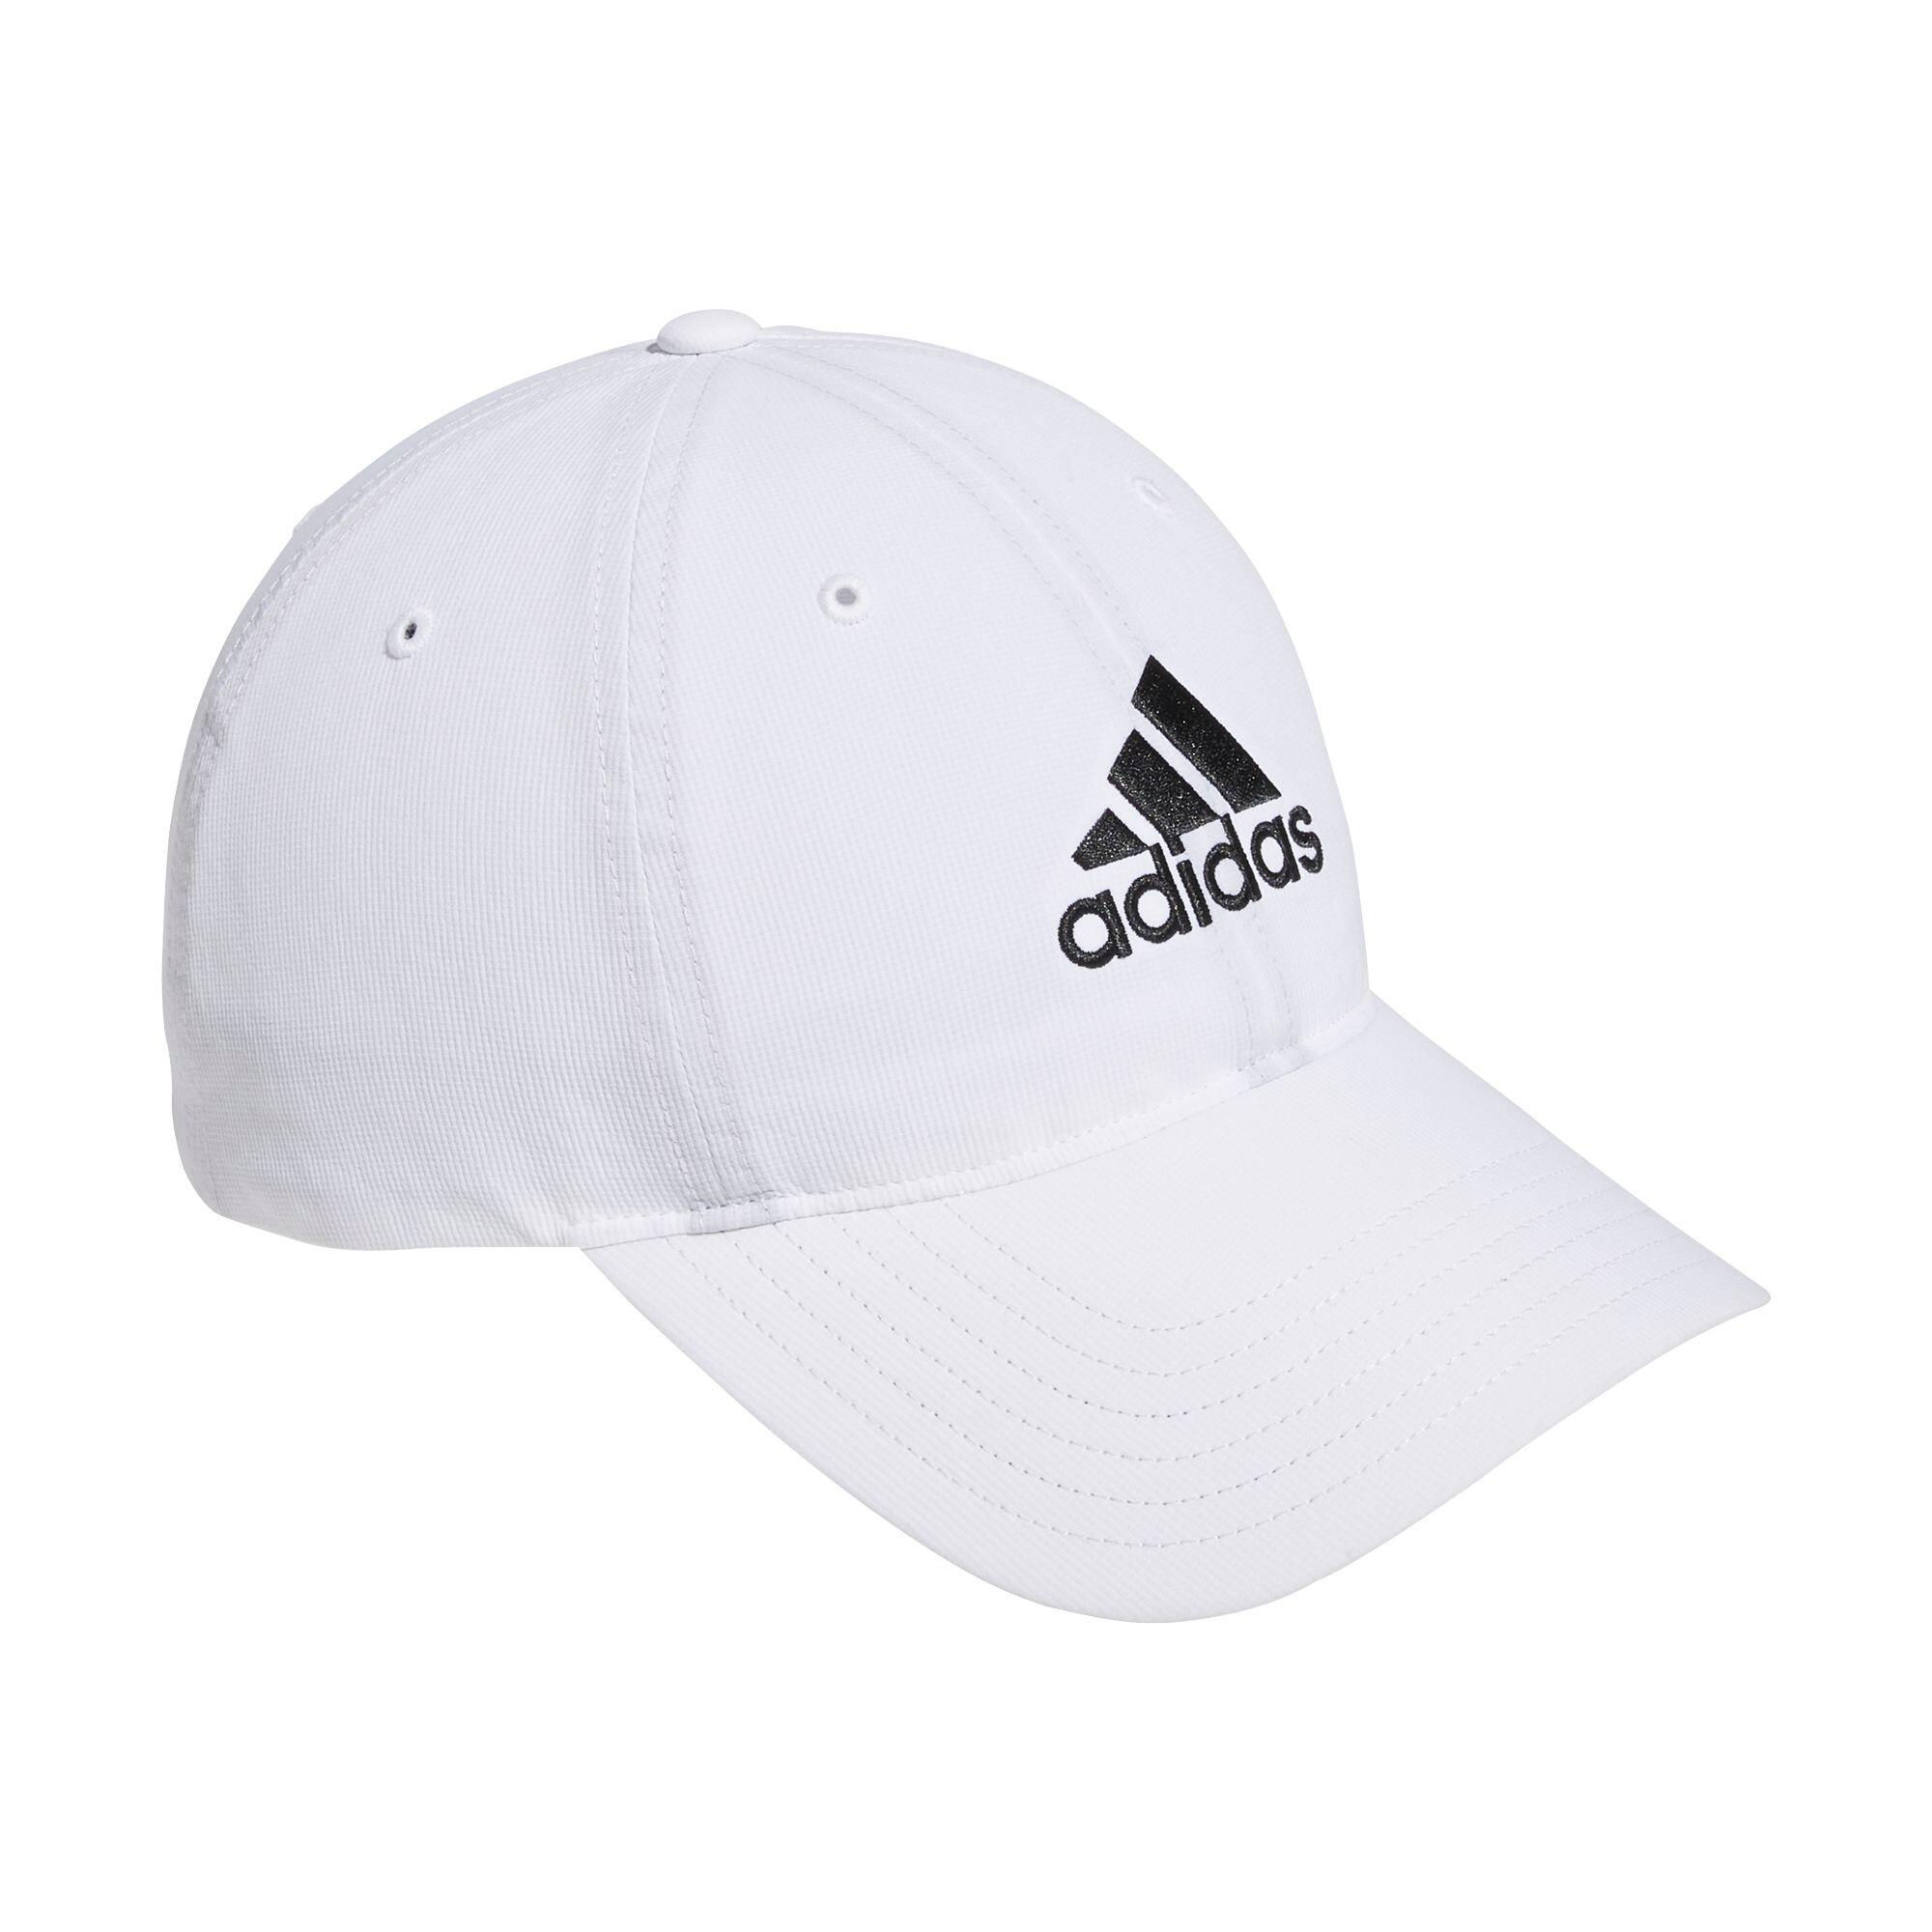 Adult Golf Cap Adidas - White 1/4